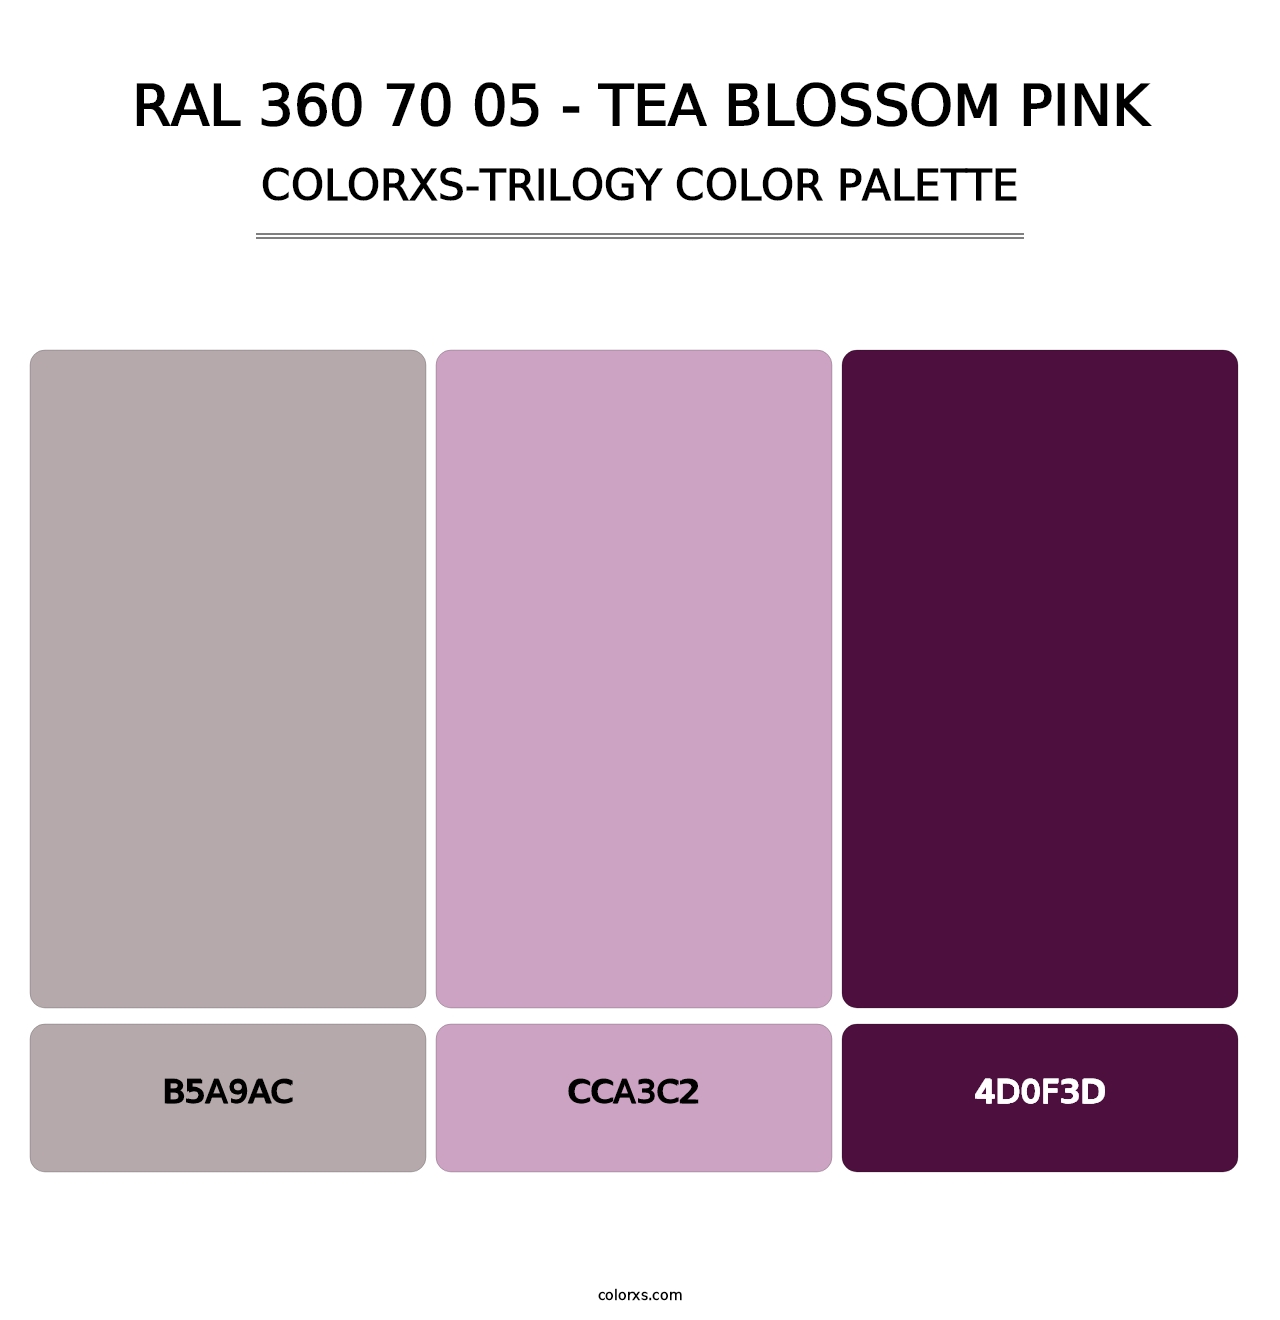 RAL 360 70 05 - Tea Blossom Pink - Colorxs Trilogy Palette